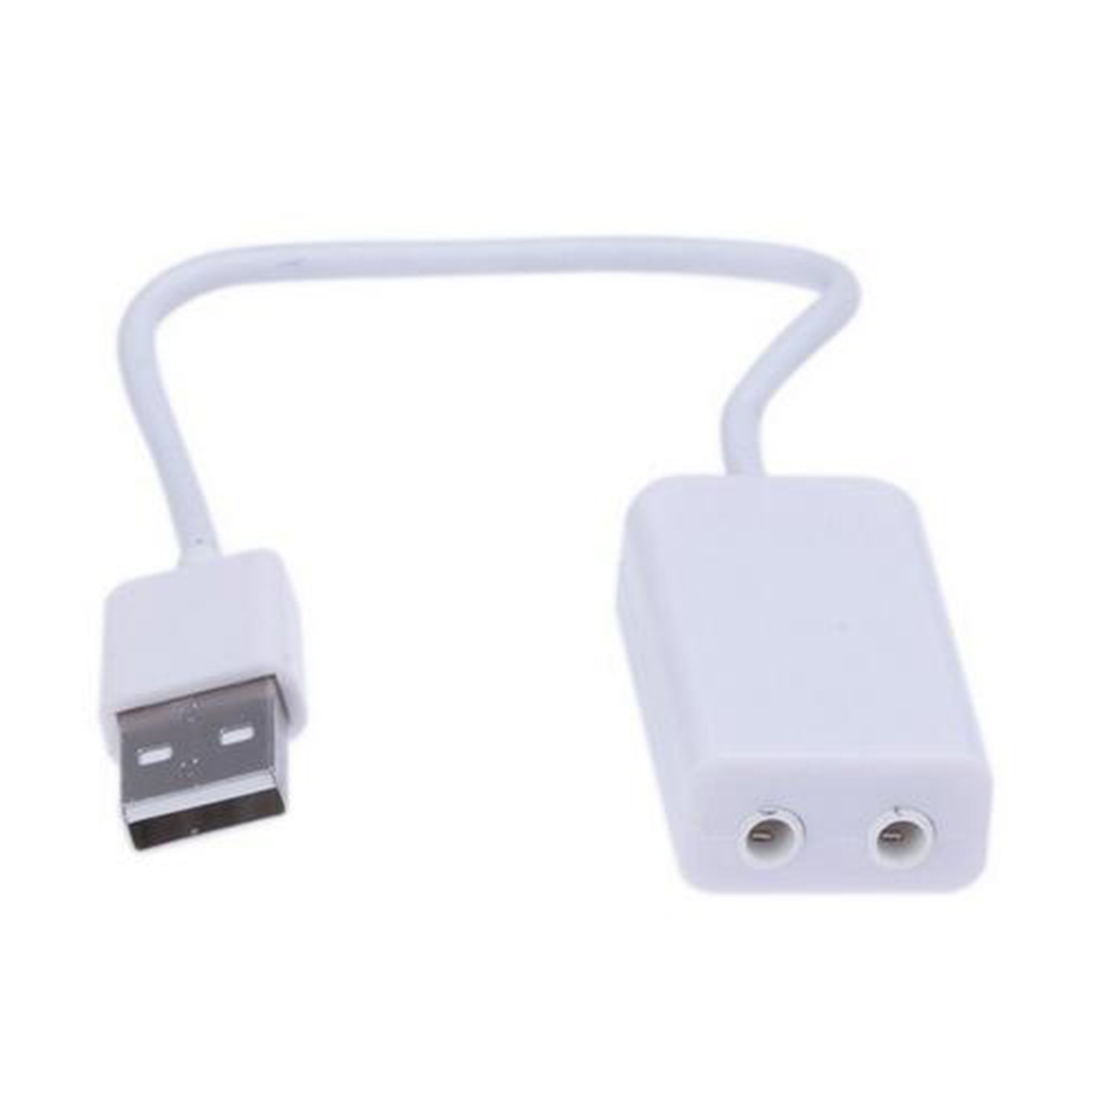 New Sienoc USB 2.0 Virtual 7.1 Channel Xear 3D External USB Sound Card Audio Adapter for Windows XP Win 7 8 Linux Vista Mac OS